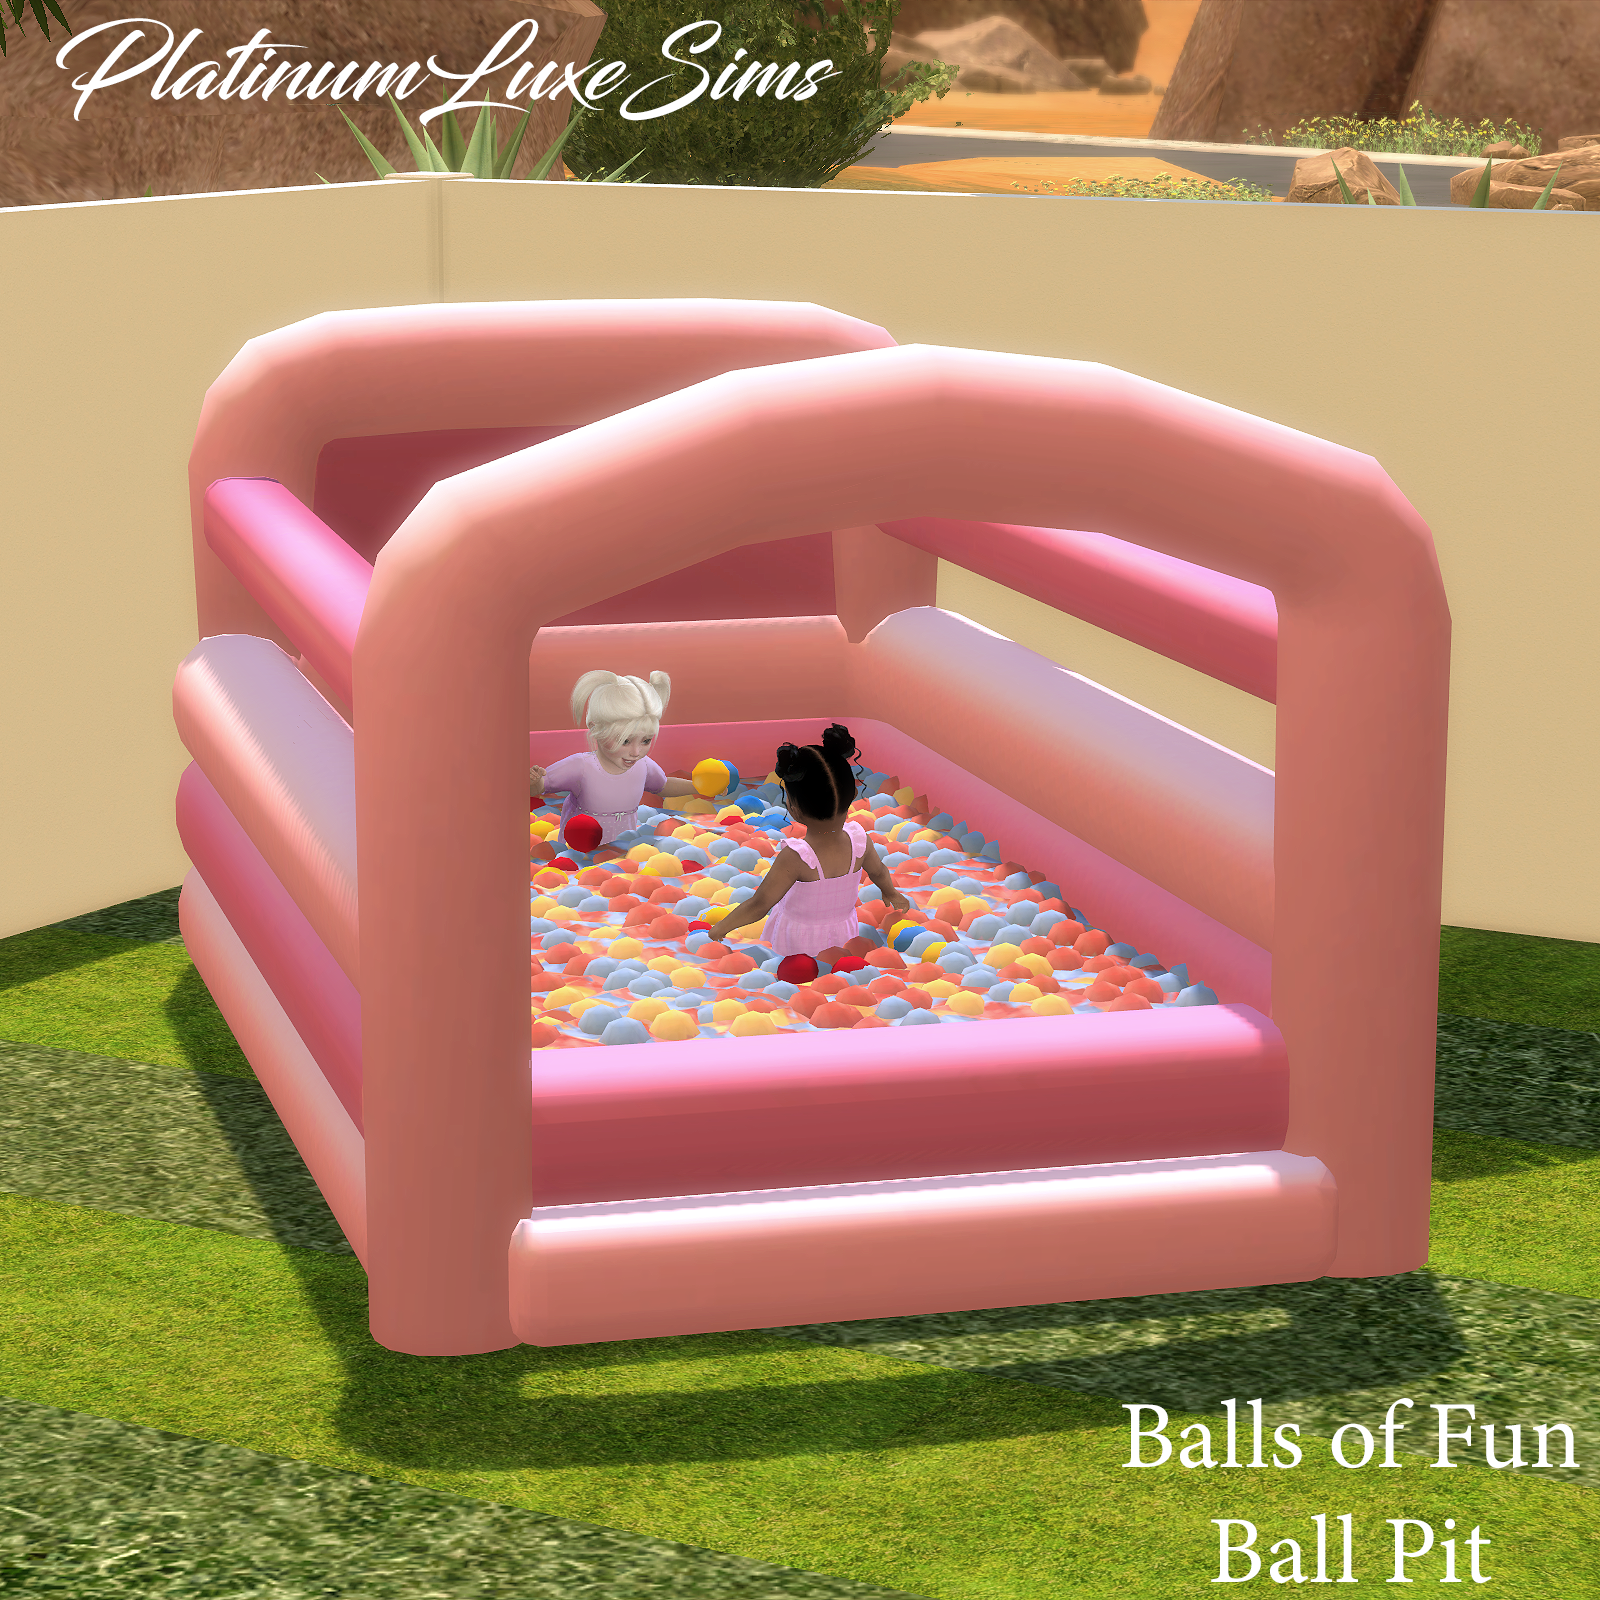 Balls of Fun Ball Pit project avatar